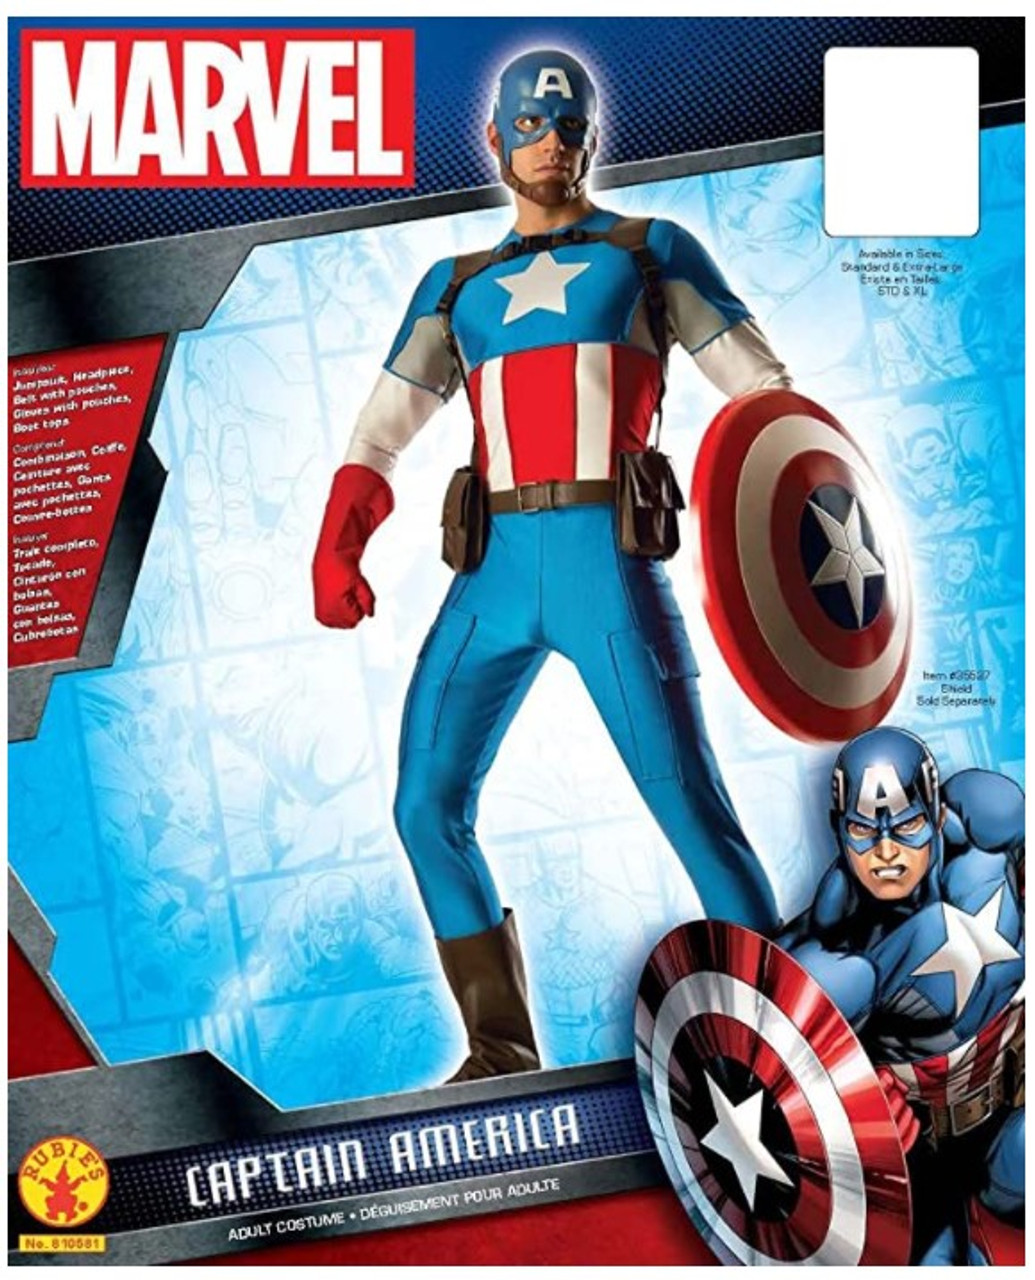 Grand Heritage Captain America Adult Costume